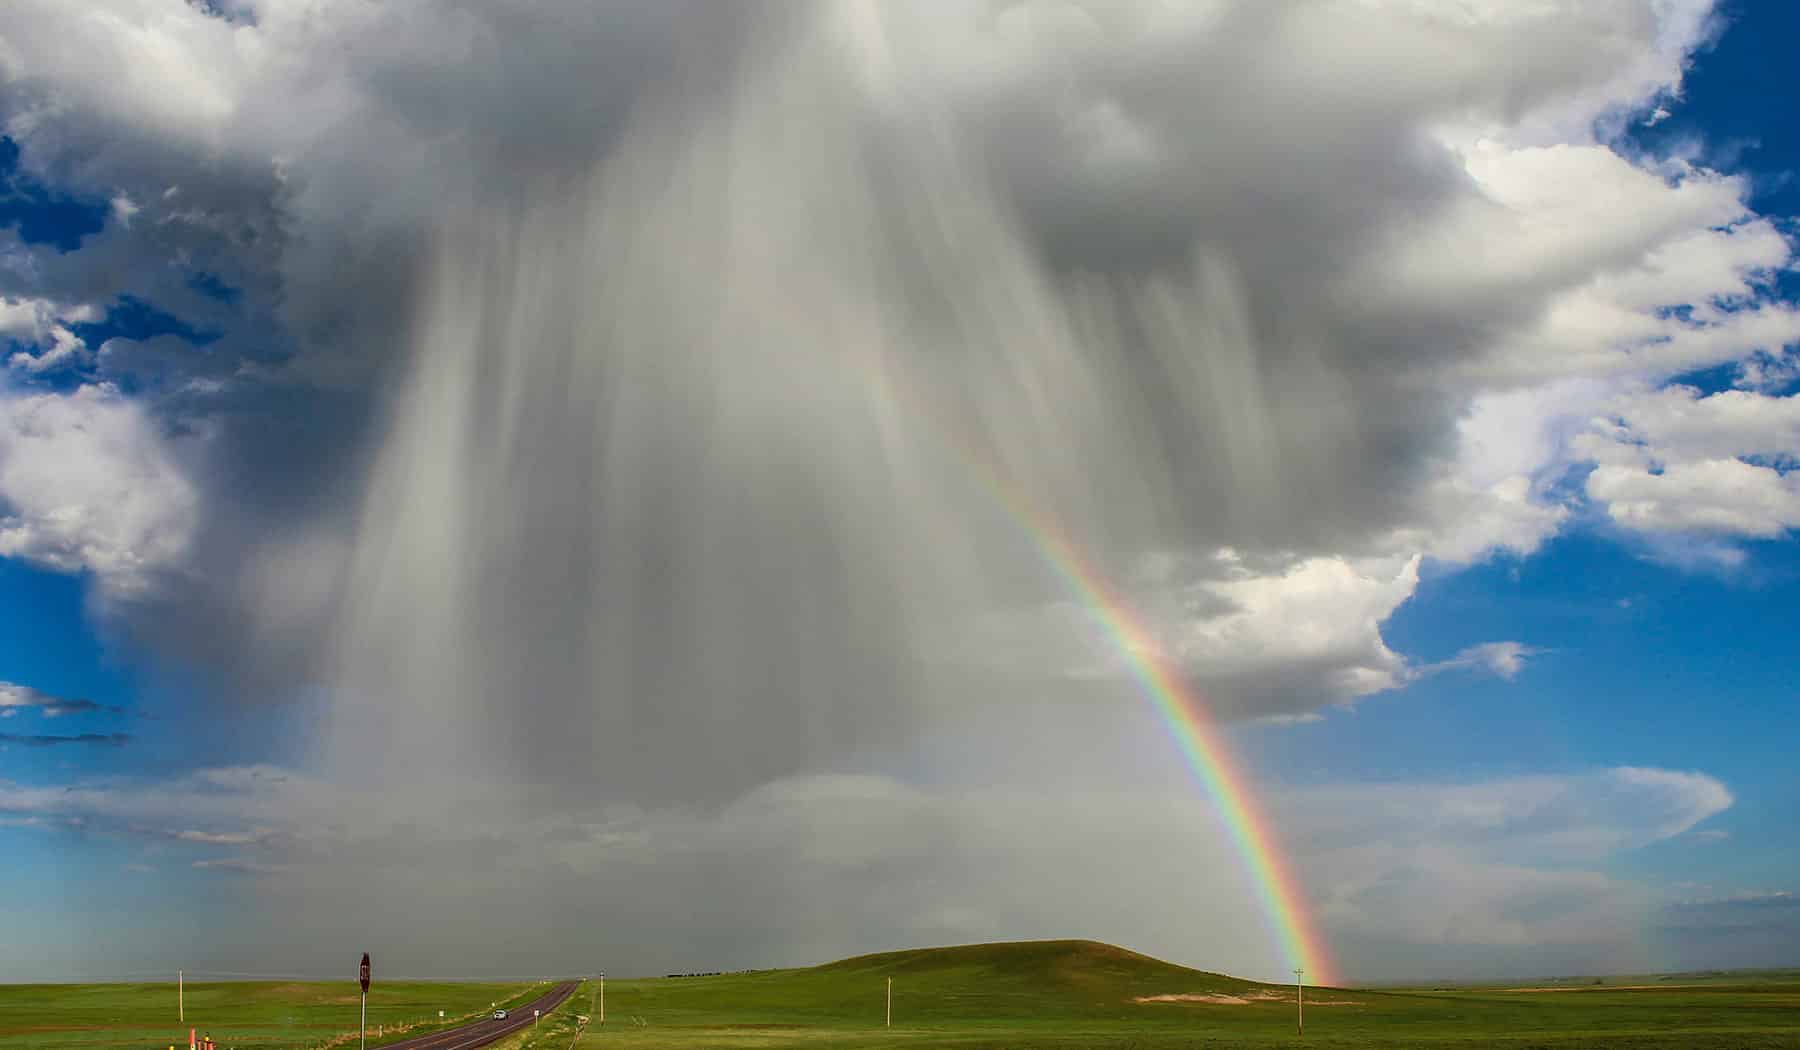 A dramatic rainstorm gives way to a rainbow over farmland, photo by NOAA